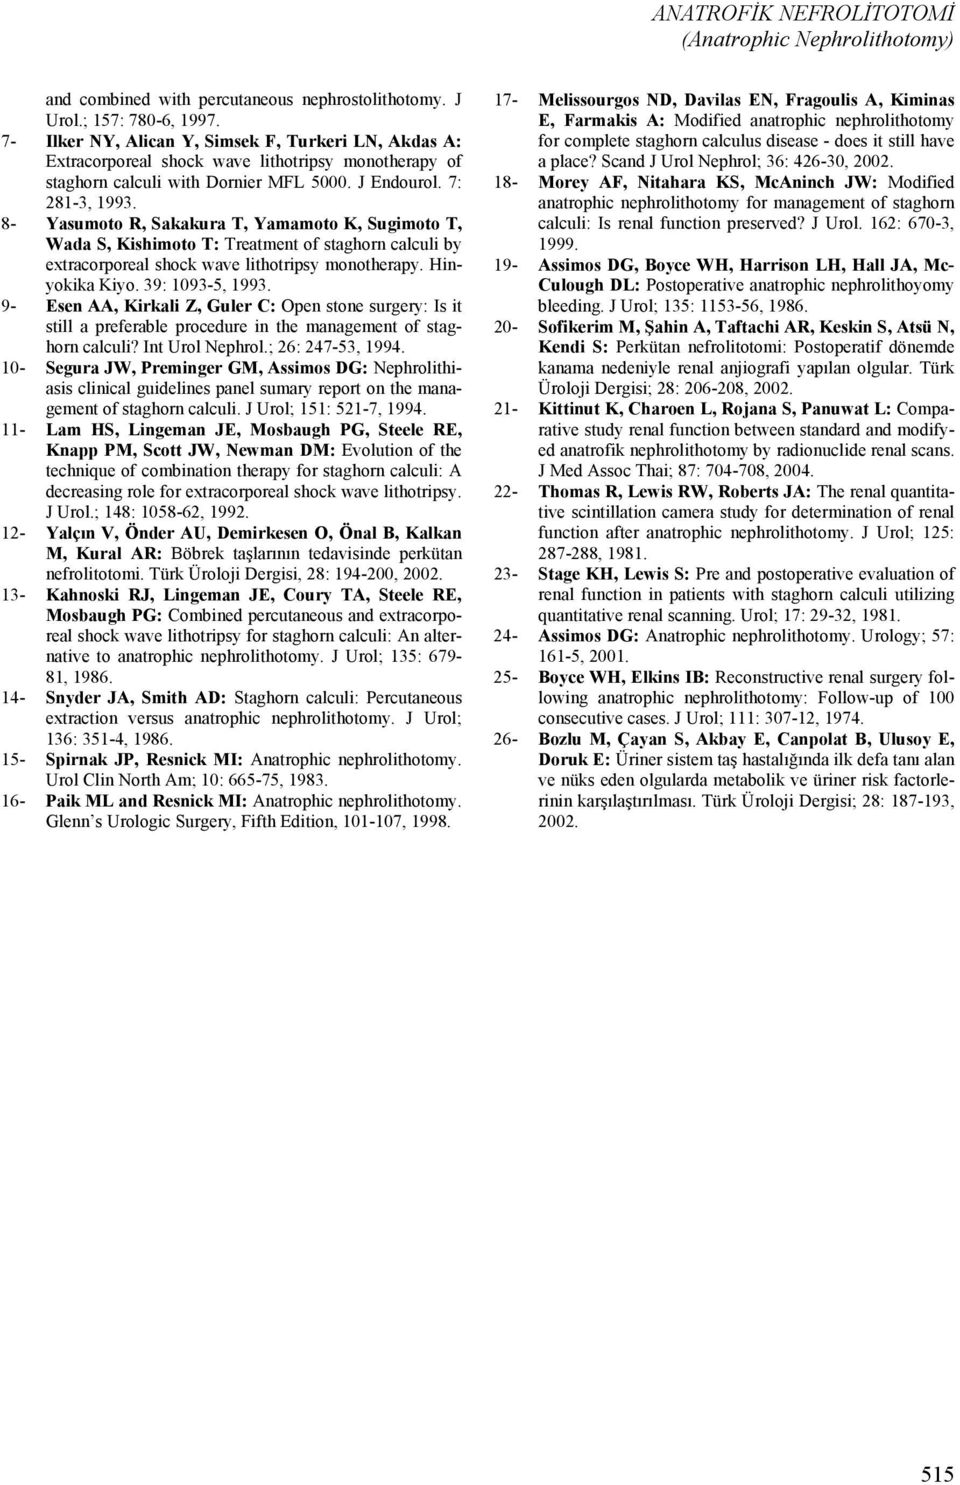 8- Yasumoto R, Sakakura T, Yamamoto K, Sugimoto T, Wada S, Kishimoto T: Treatment of staghorn calculi by extracorporeal shock wave lithotripsy monotherapy. Hinyokika Kiyo. 39: 1093-5, 1993.